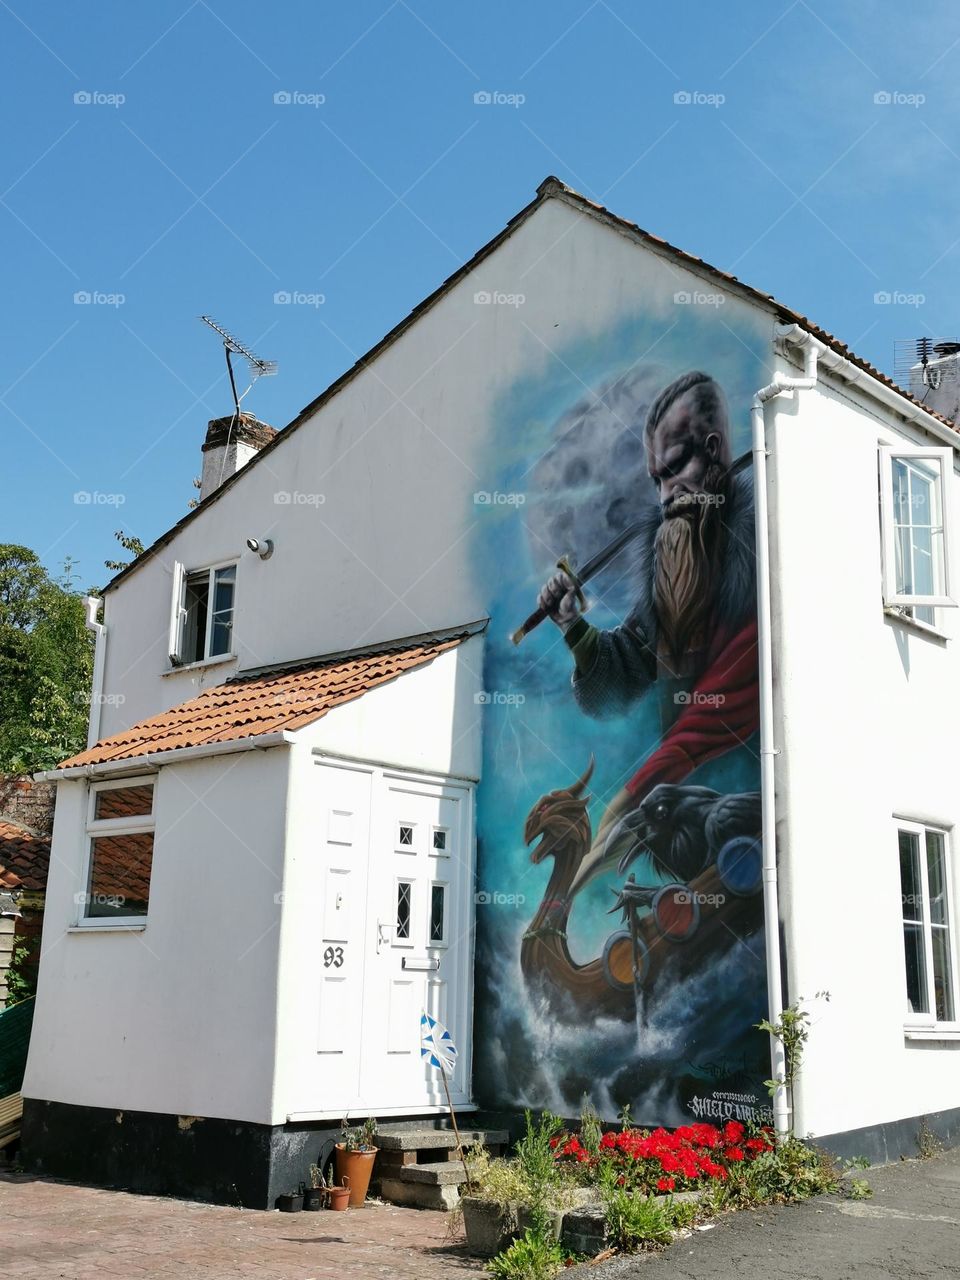 Visual street art in England. Beautiful murals in Glastonbury.